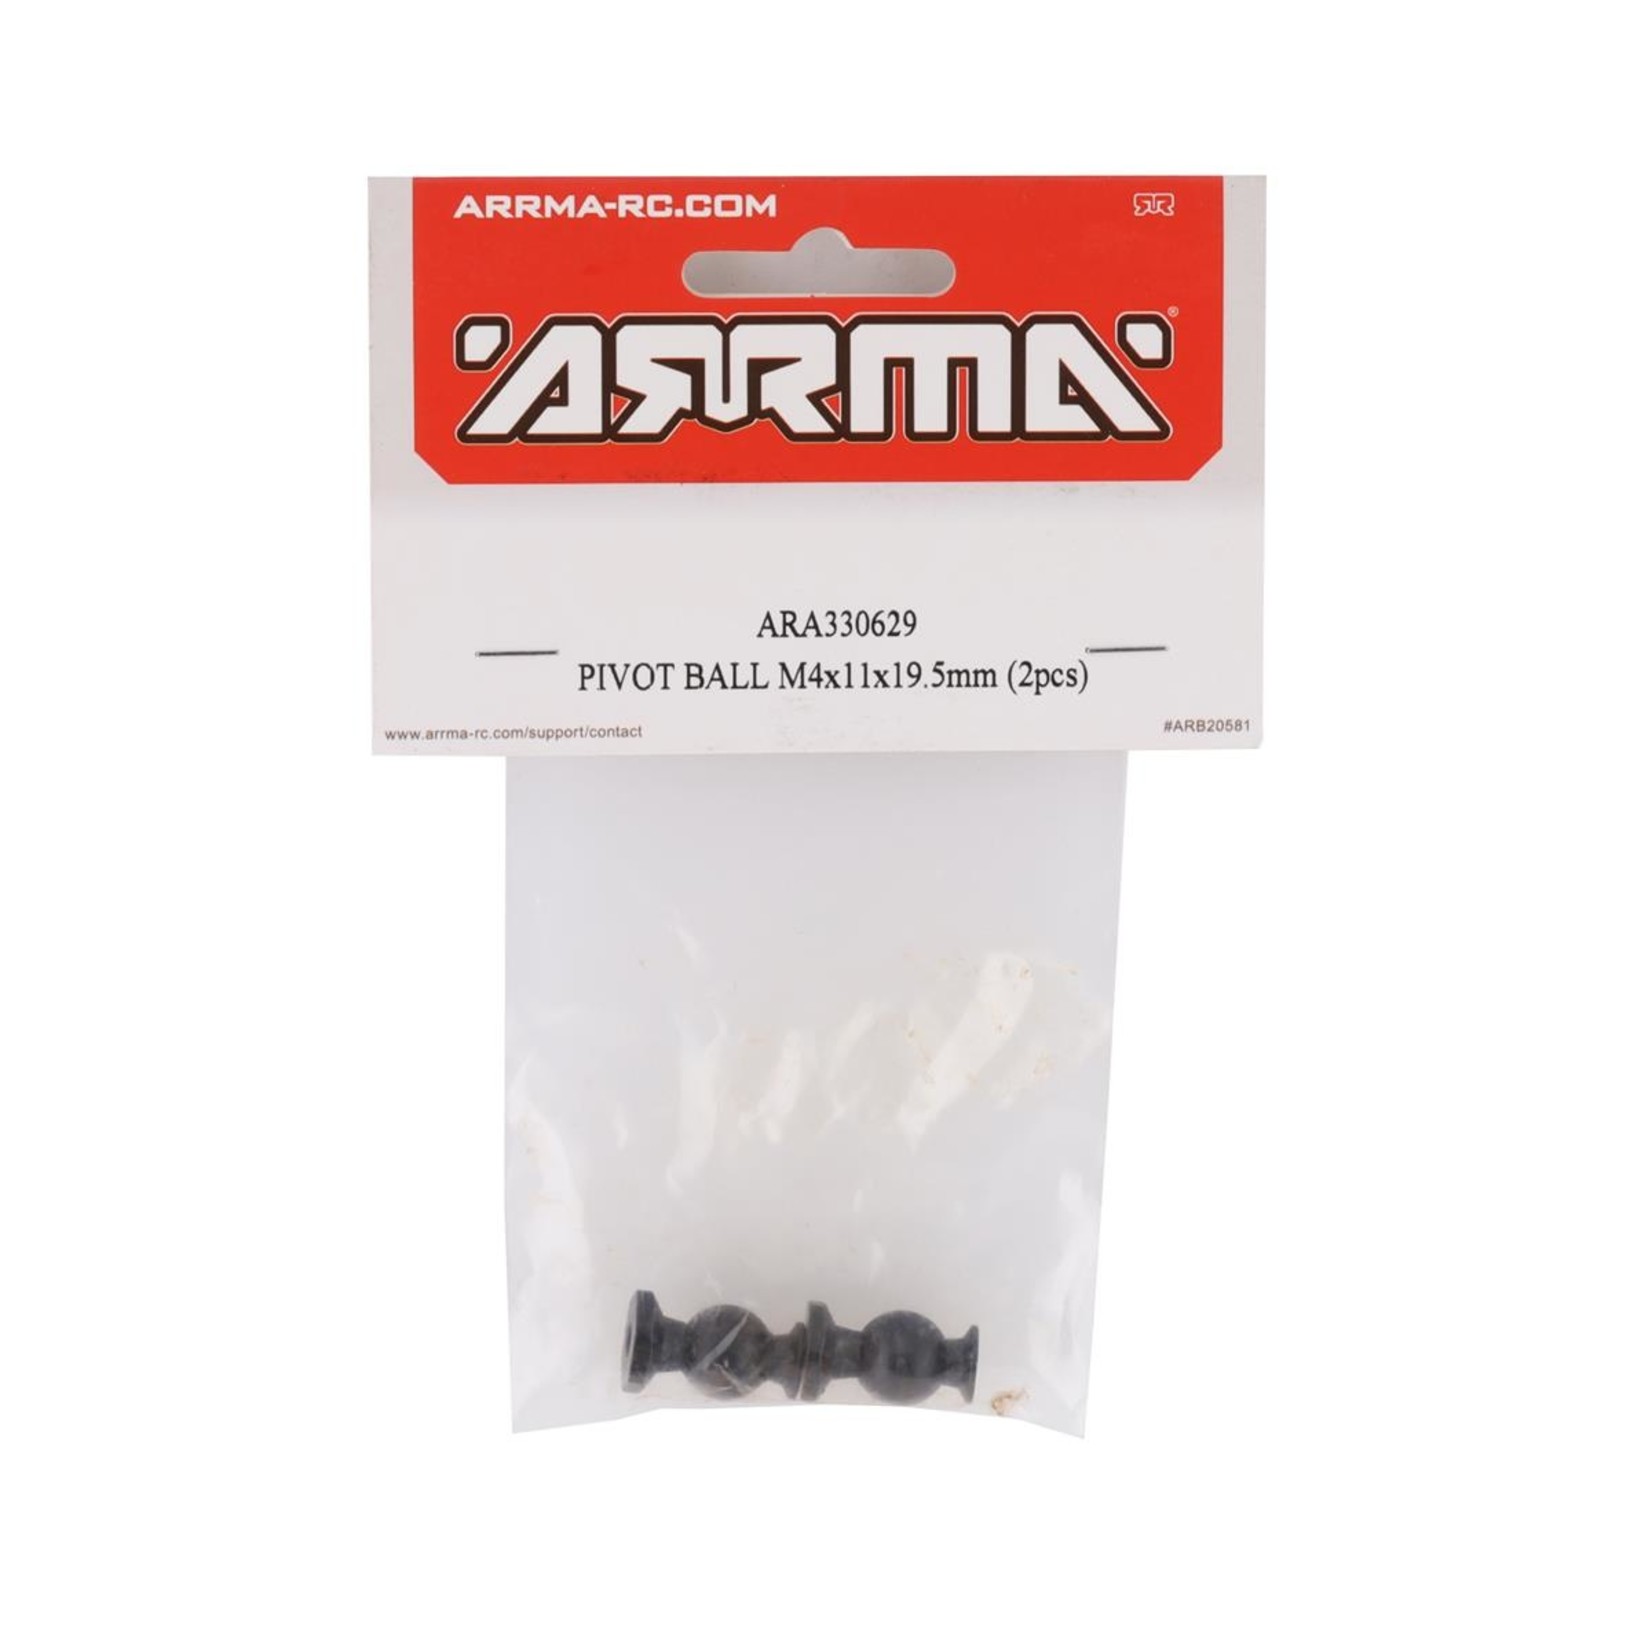 ARRMA Arrma 8S BLX 4x11x19.5mm Pivot Ball (2) #ARA330629